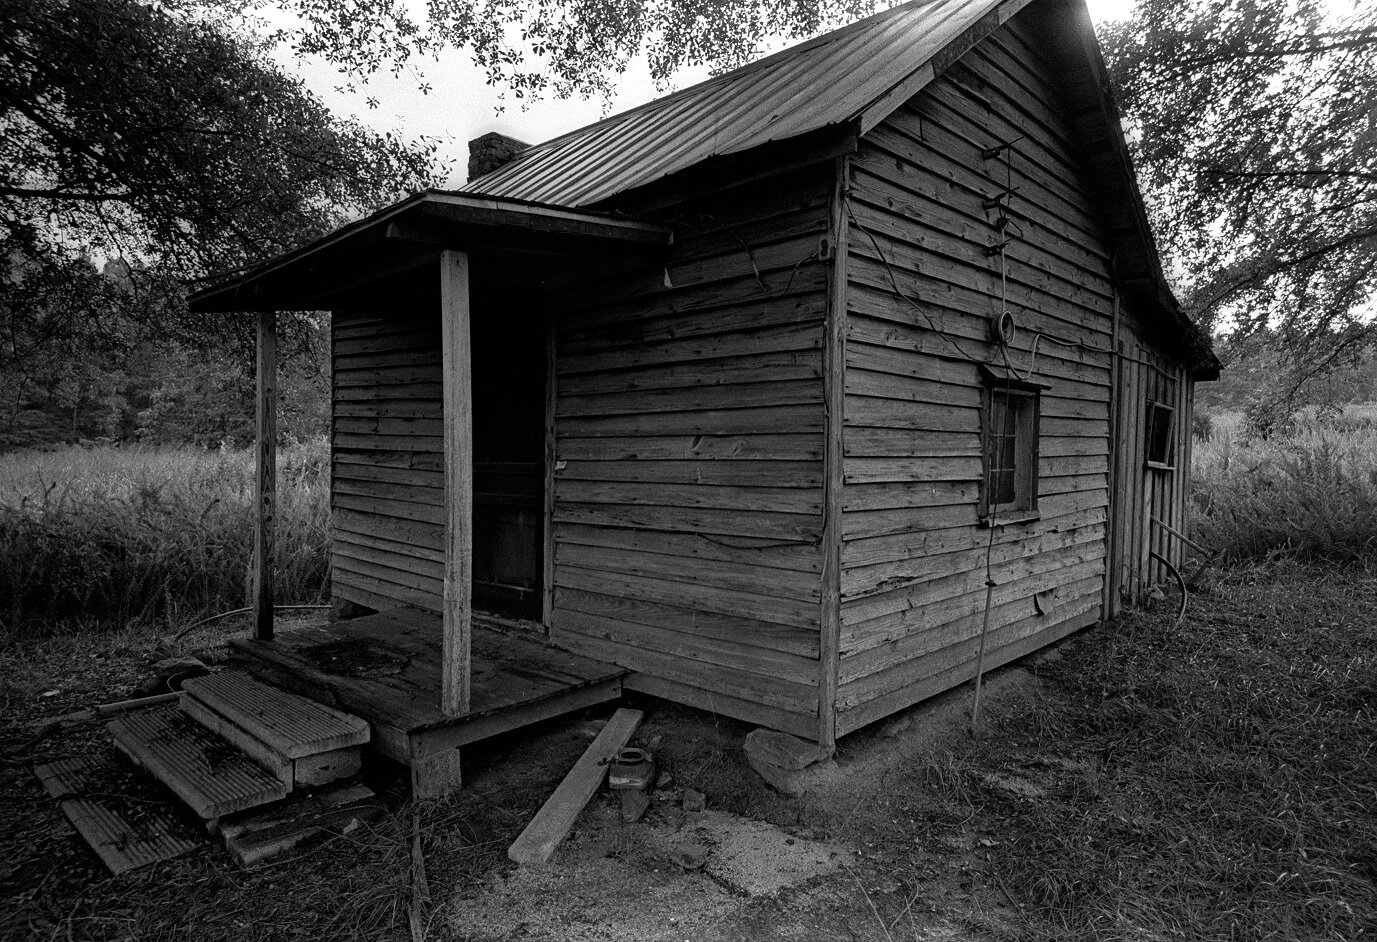  Sharecropper’s shack, Spartanburg, South Carolina. 